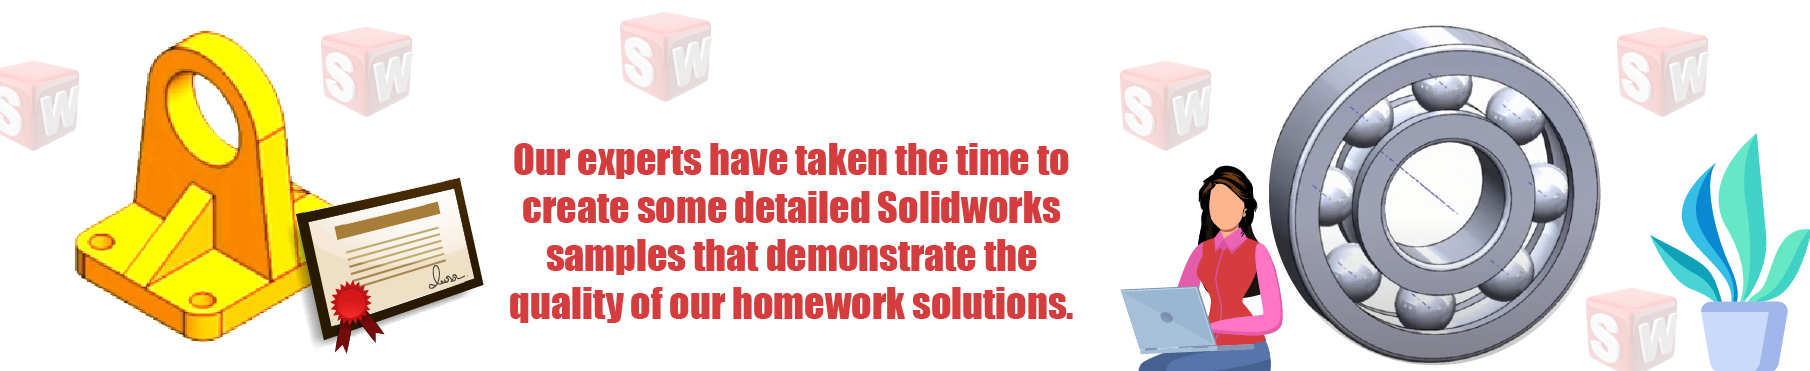 Solidworks Homework Help Banner 4